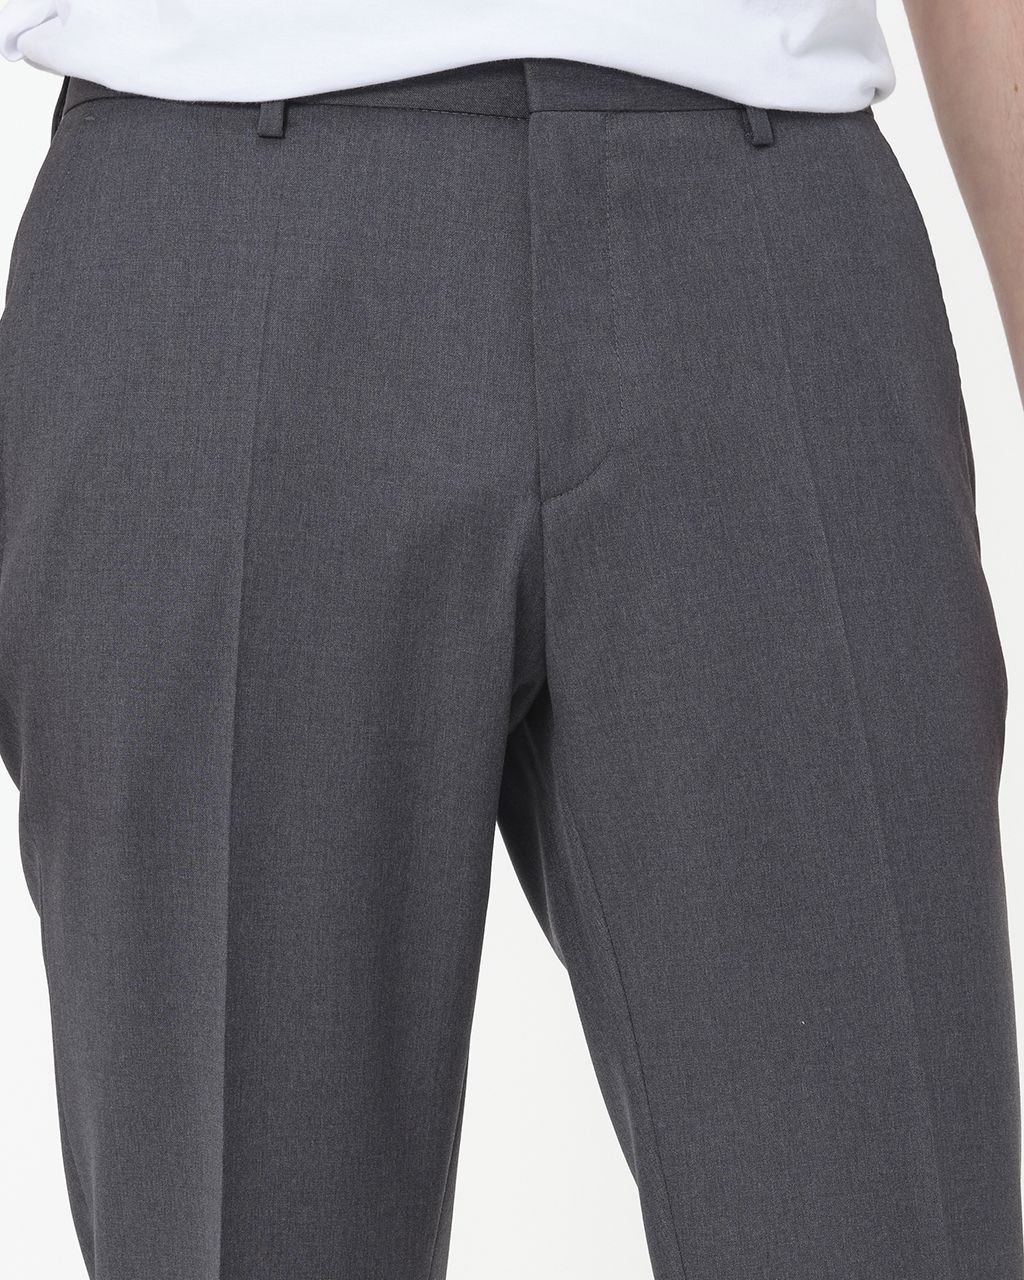 Hugo Boss Menswear Mix & Match Pantalon Donker grijs 075744-002-102